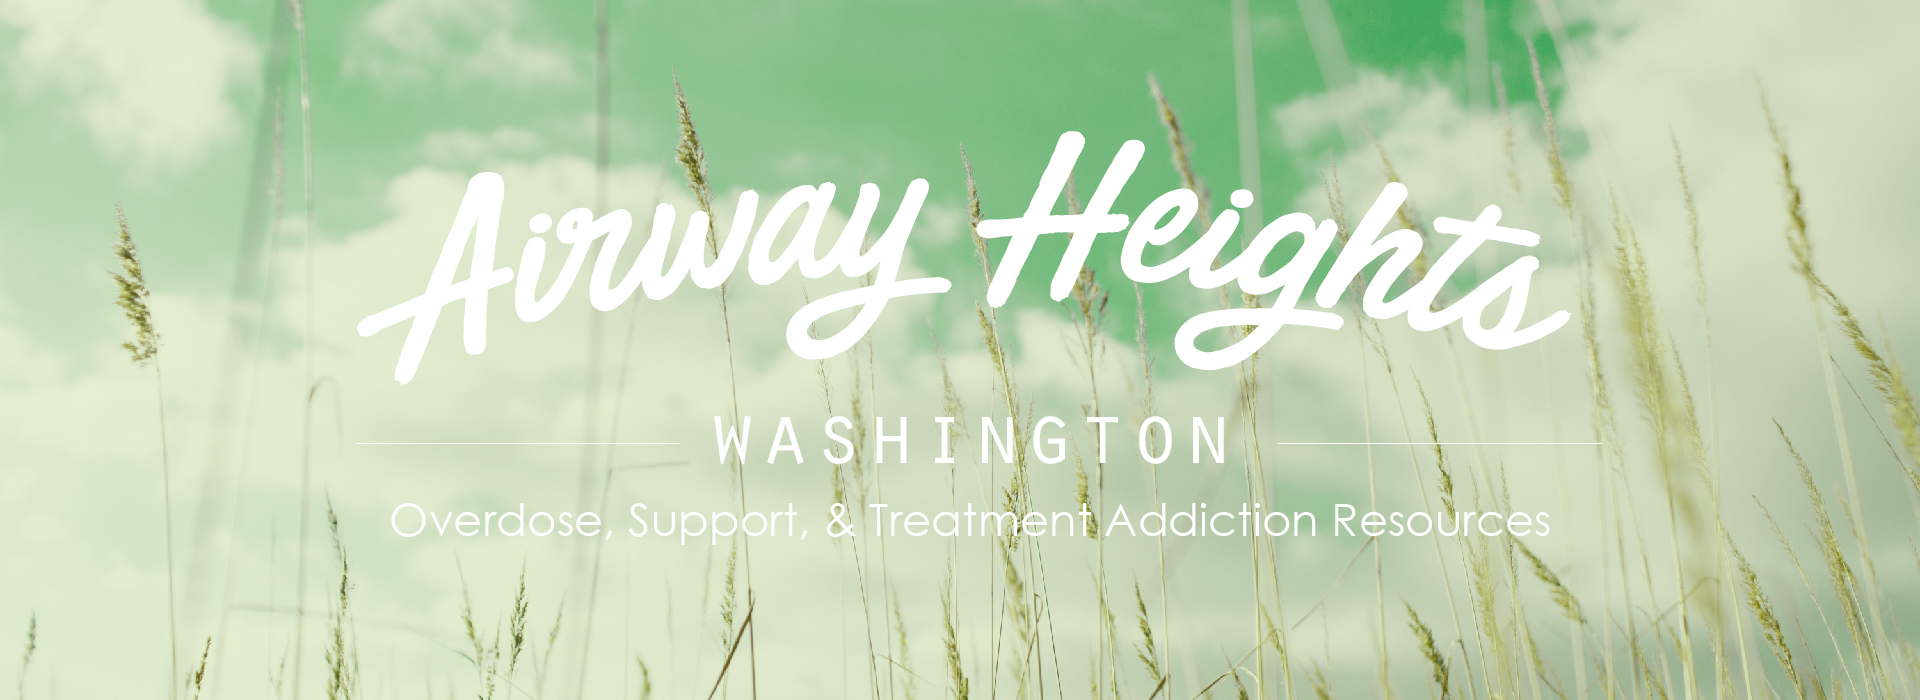 Airway Heights, Washington Addiction Resources